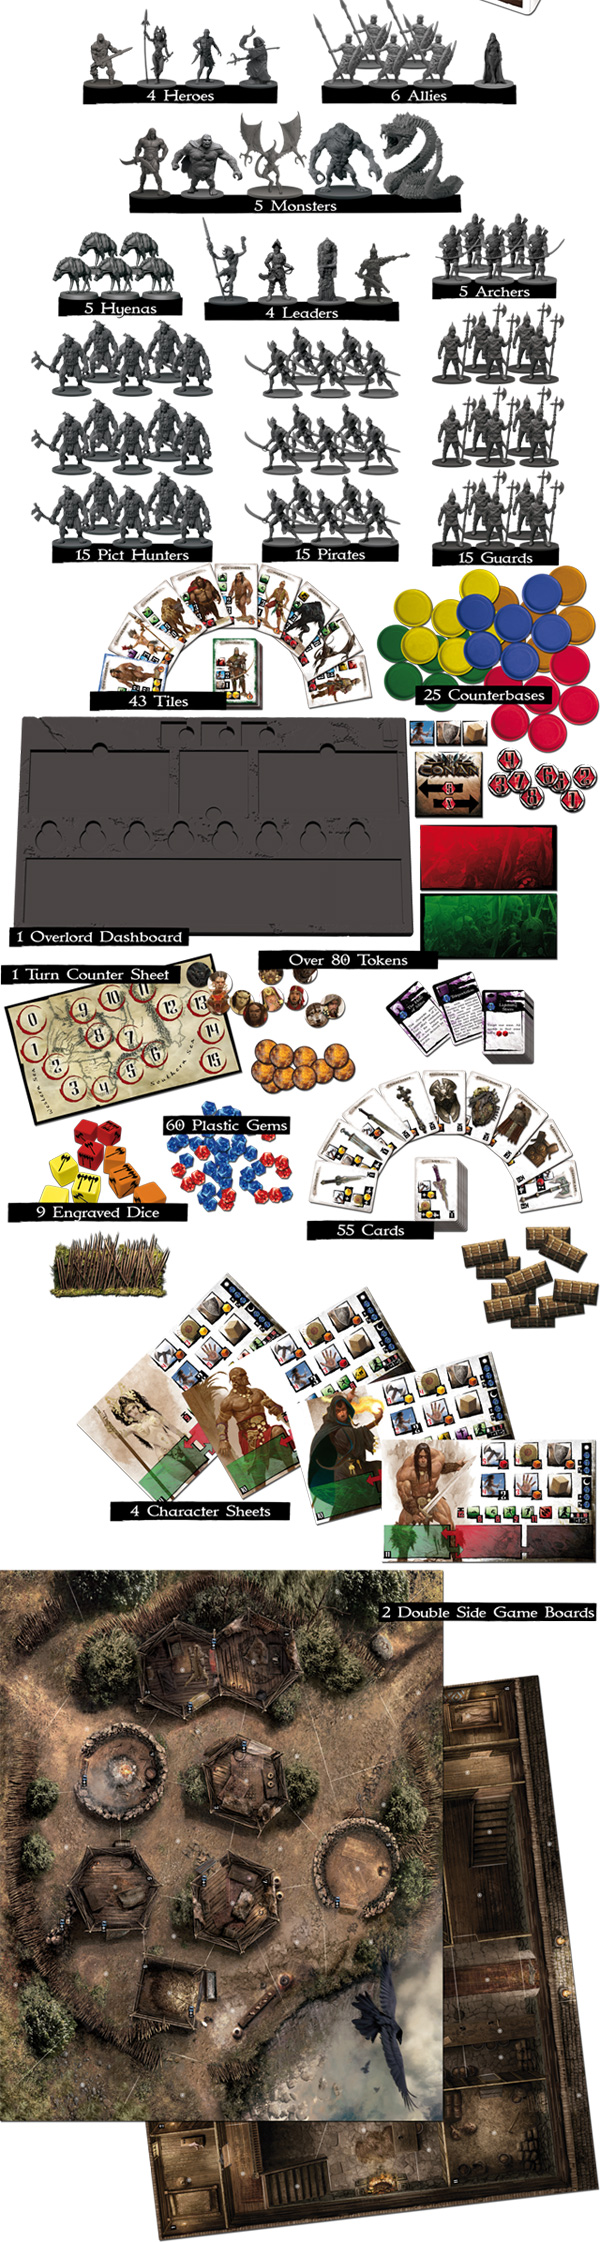 conan-boardgame-2015